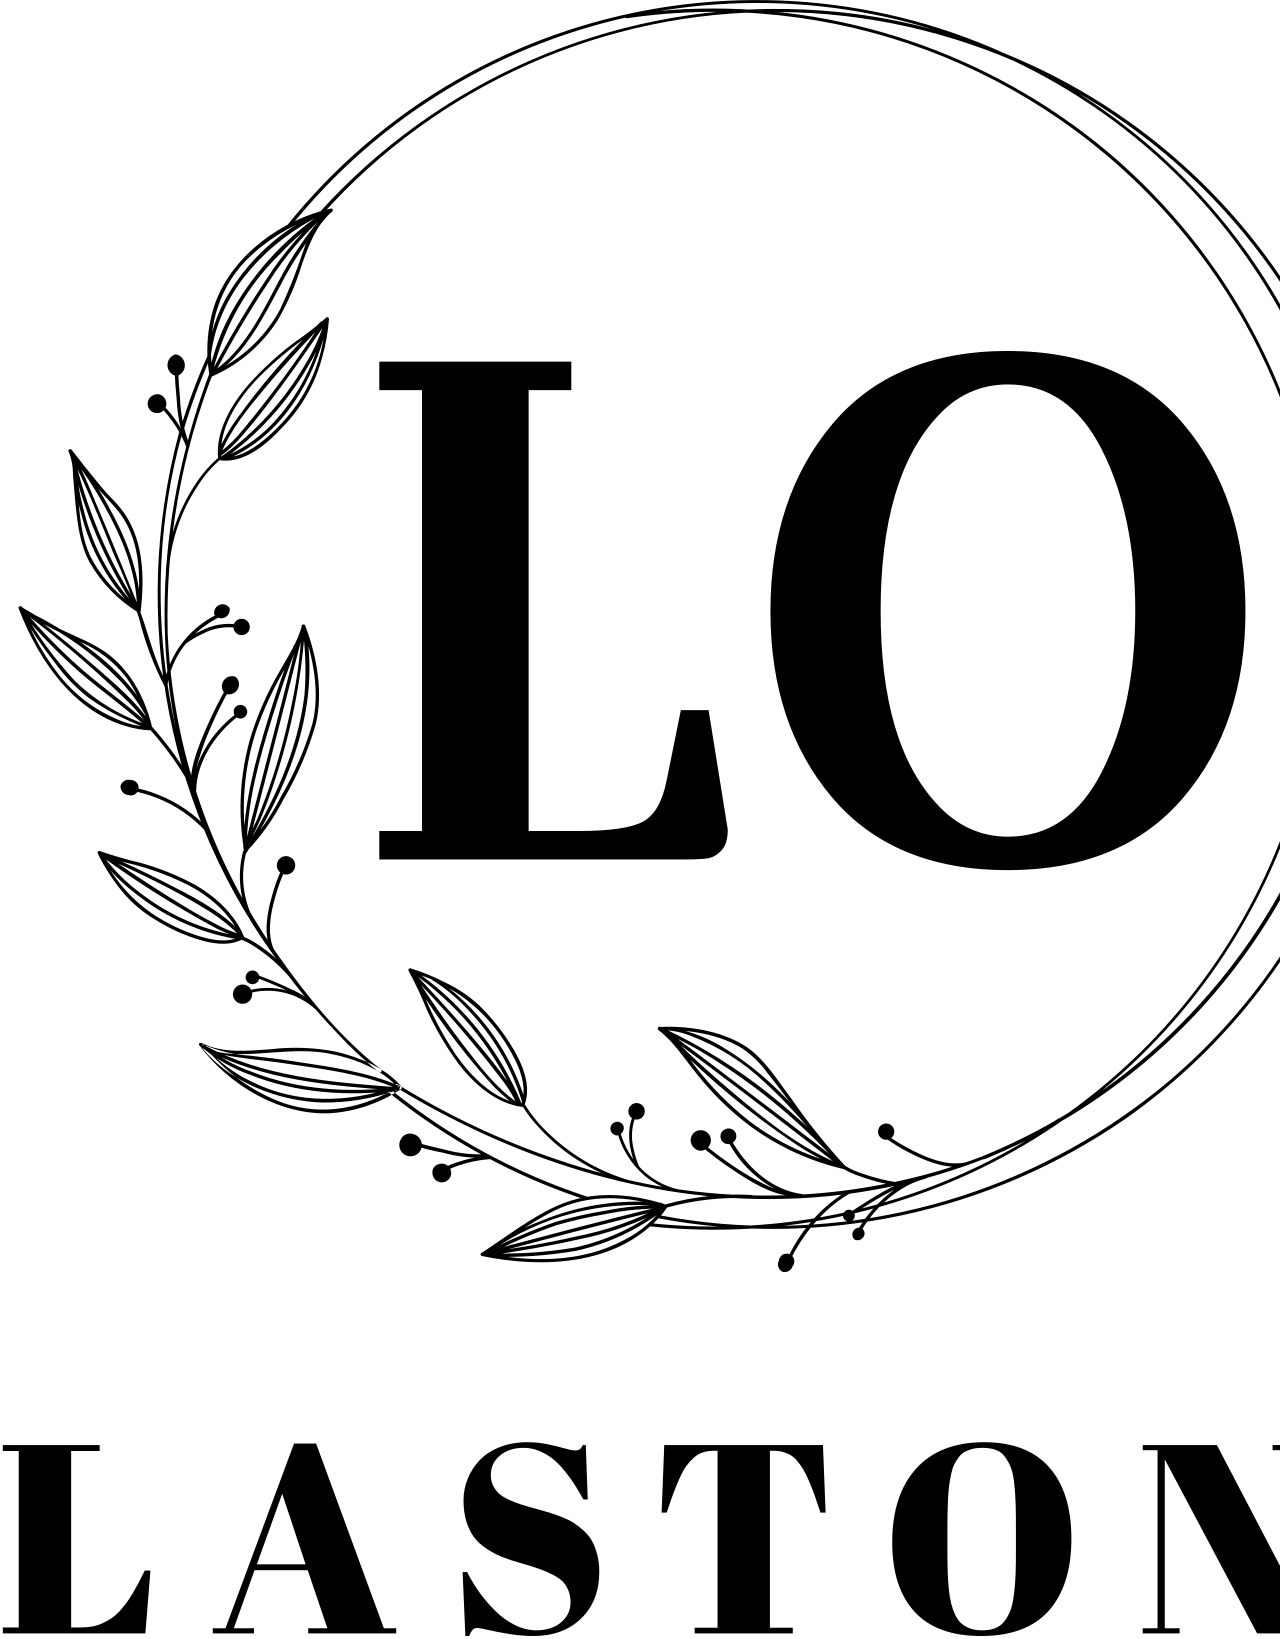 Lastone's logo